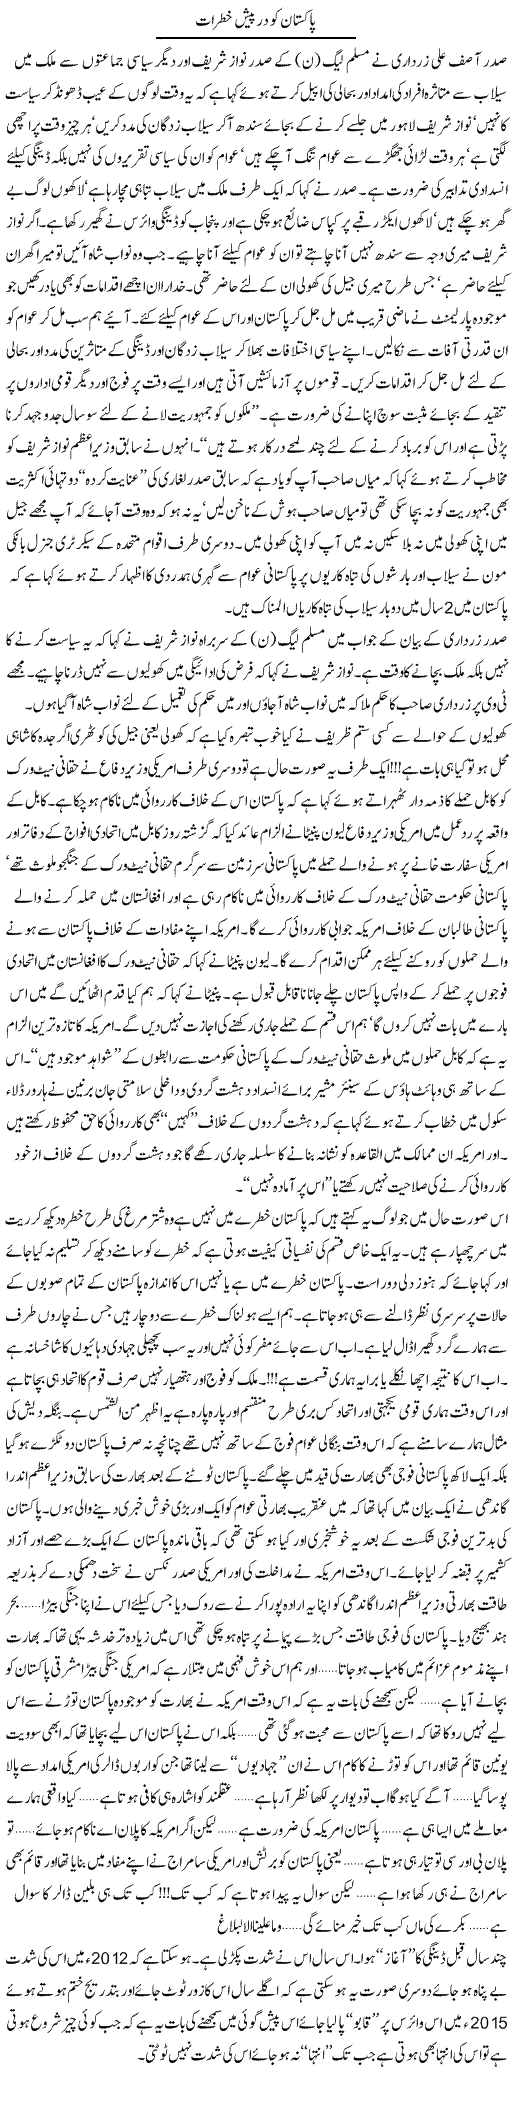 Threats To Pakistan Express Column Zamurad Naqvi  19 September 2011